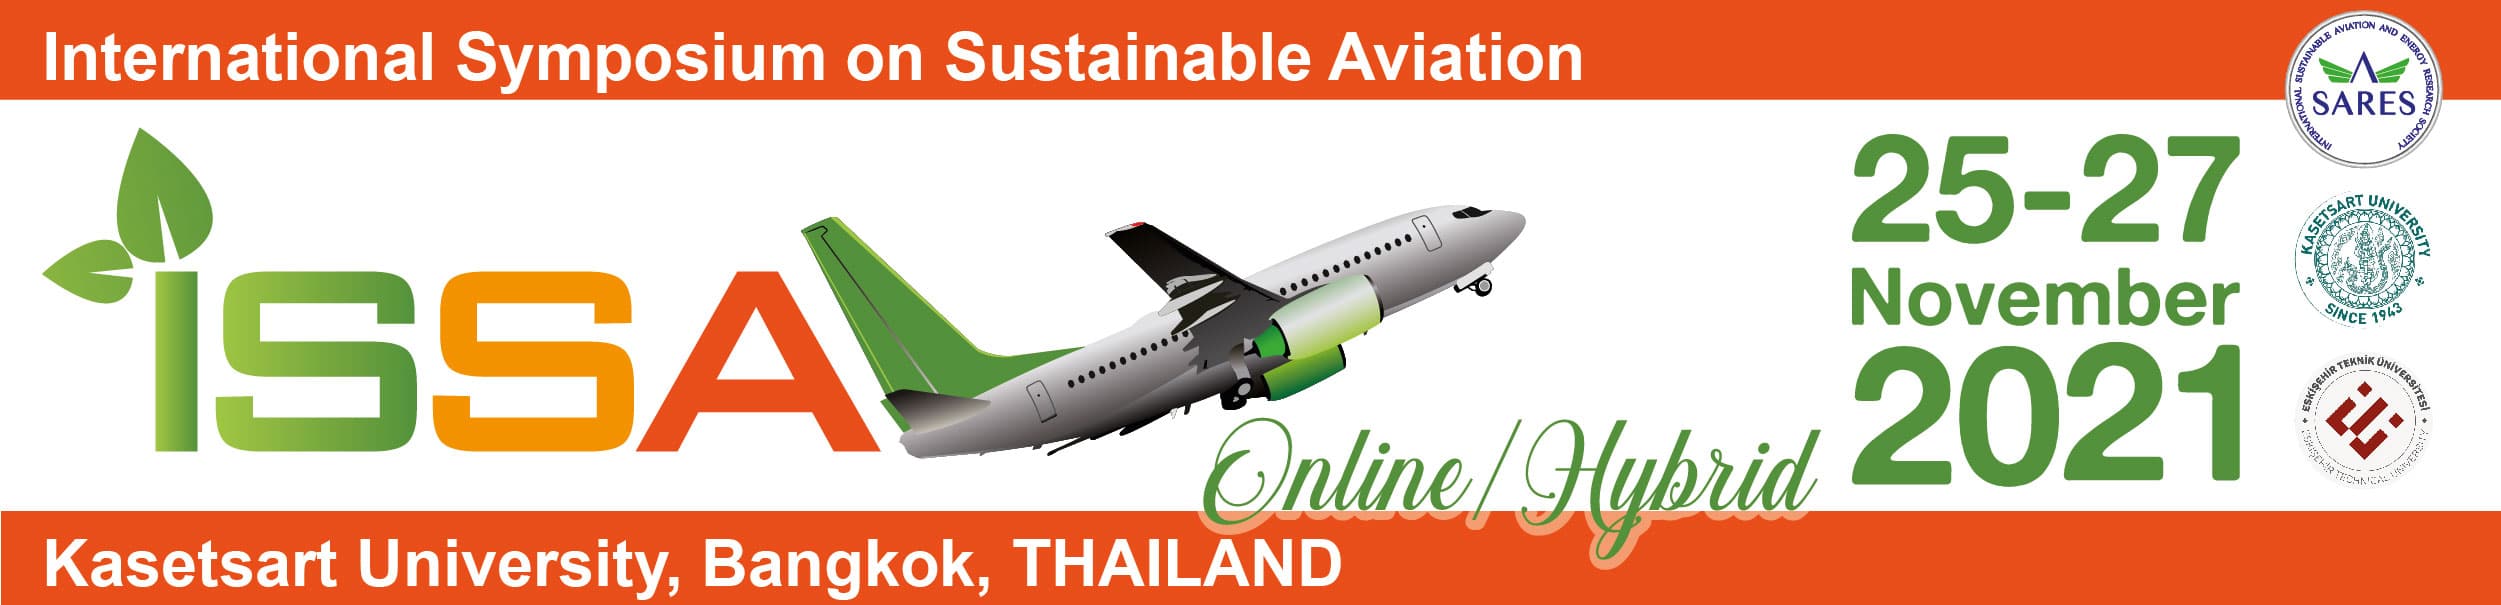 International Symposium on Sustainable Aviation (ISSA)